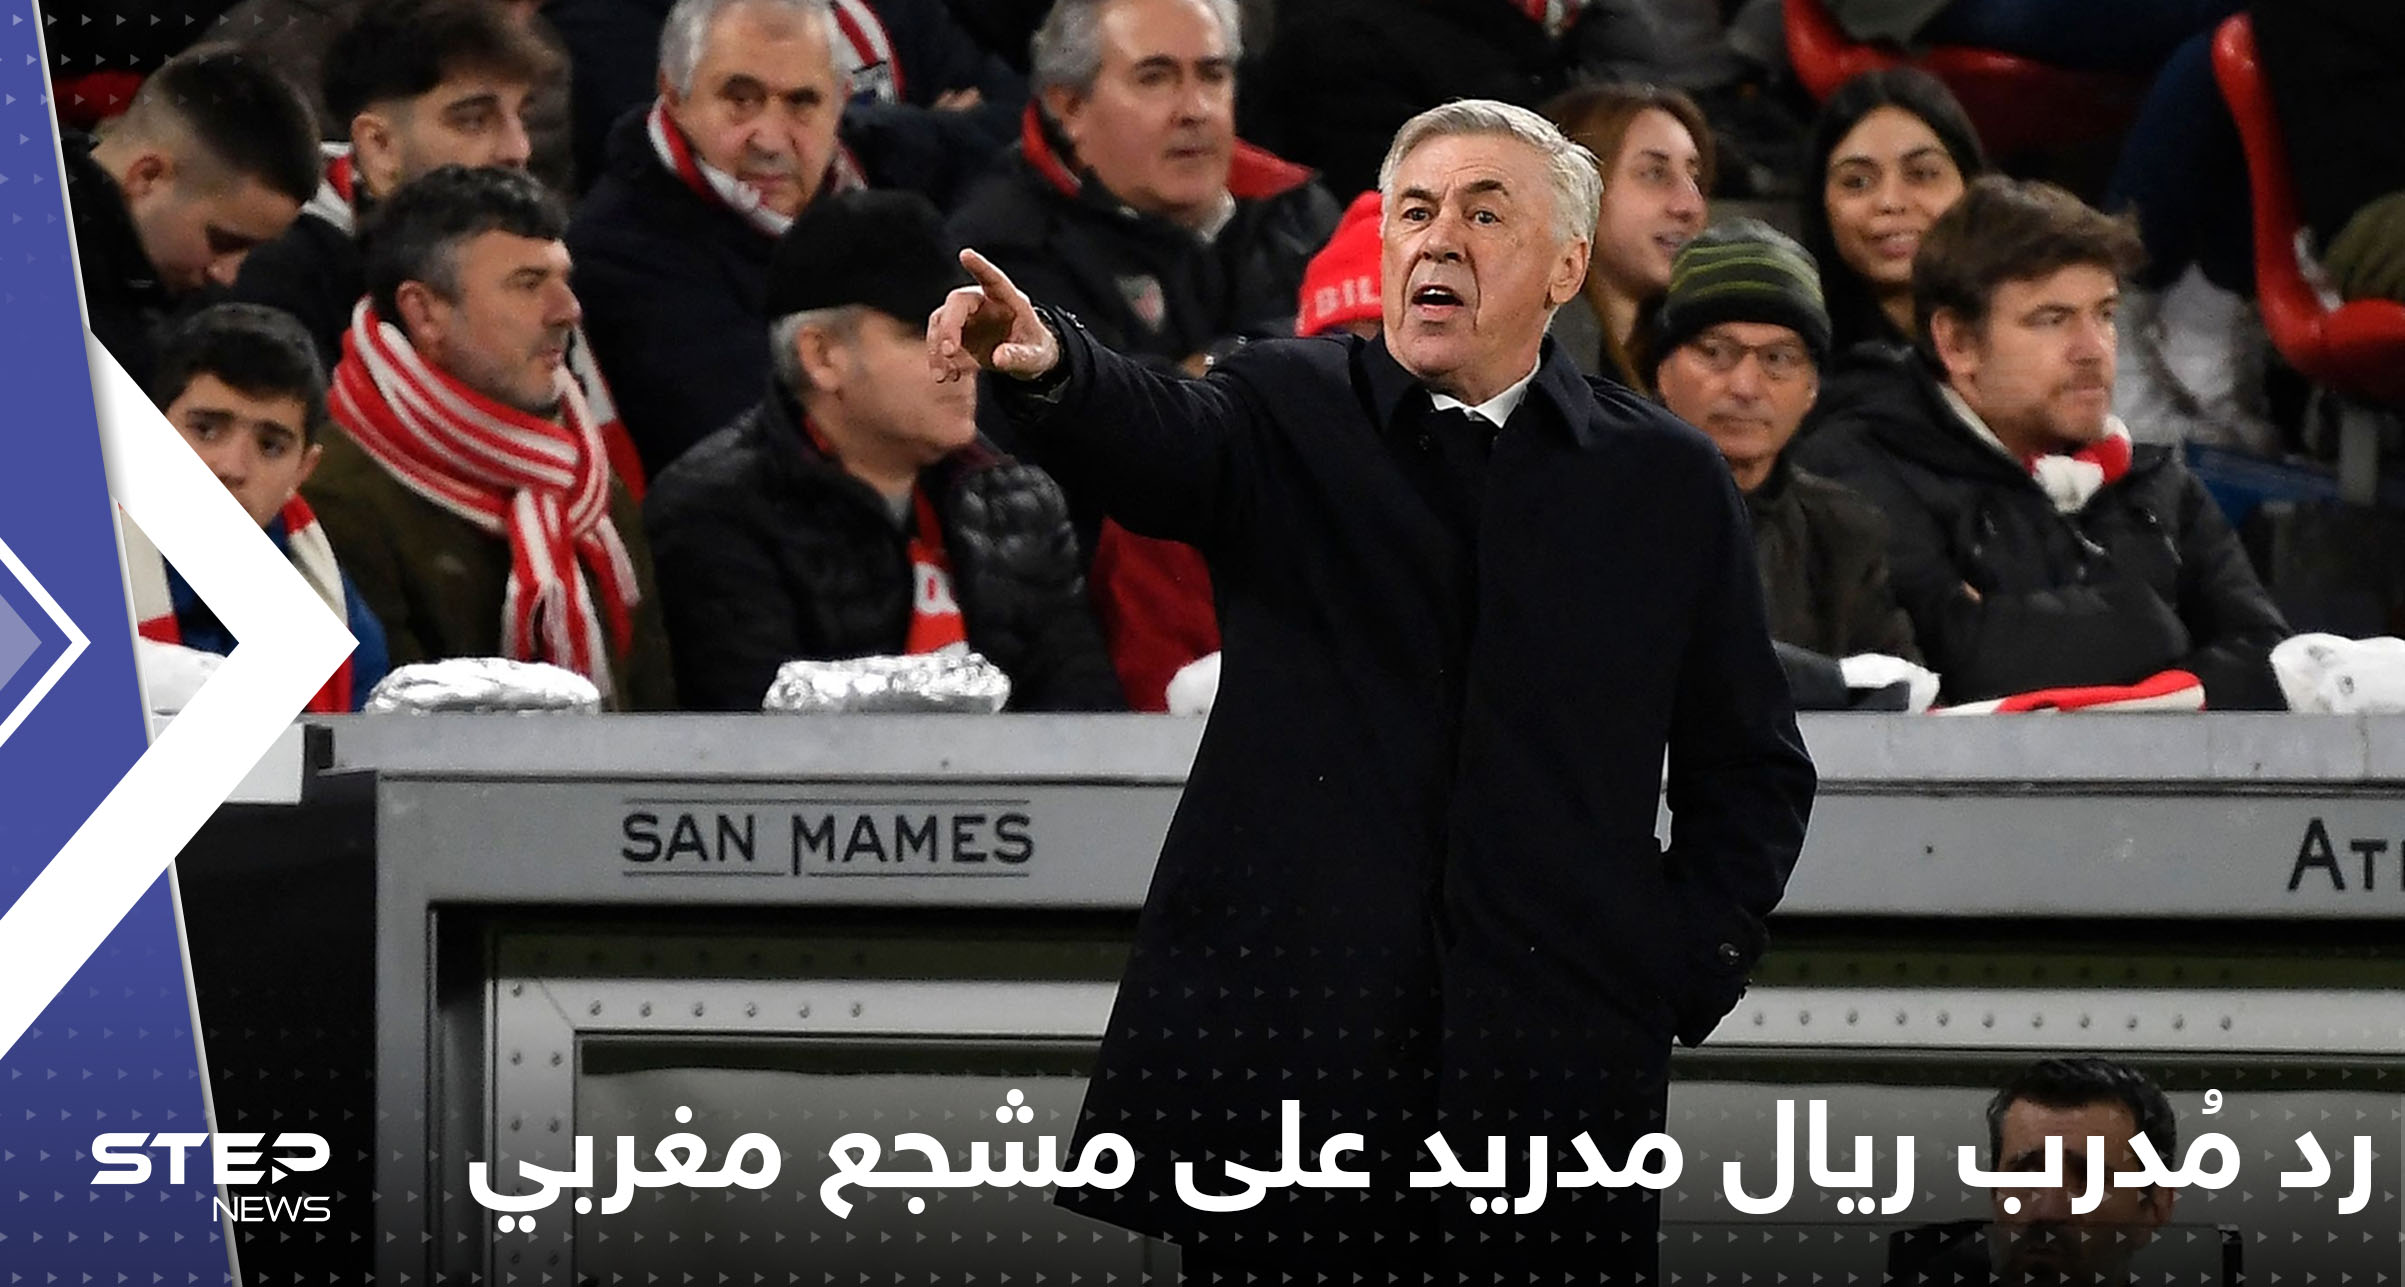 رد مُدرب ريال مدريد على مشجع مغربي